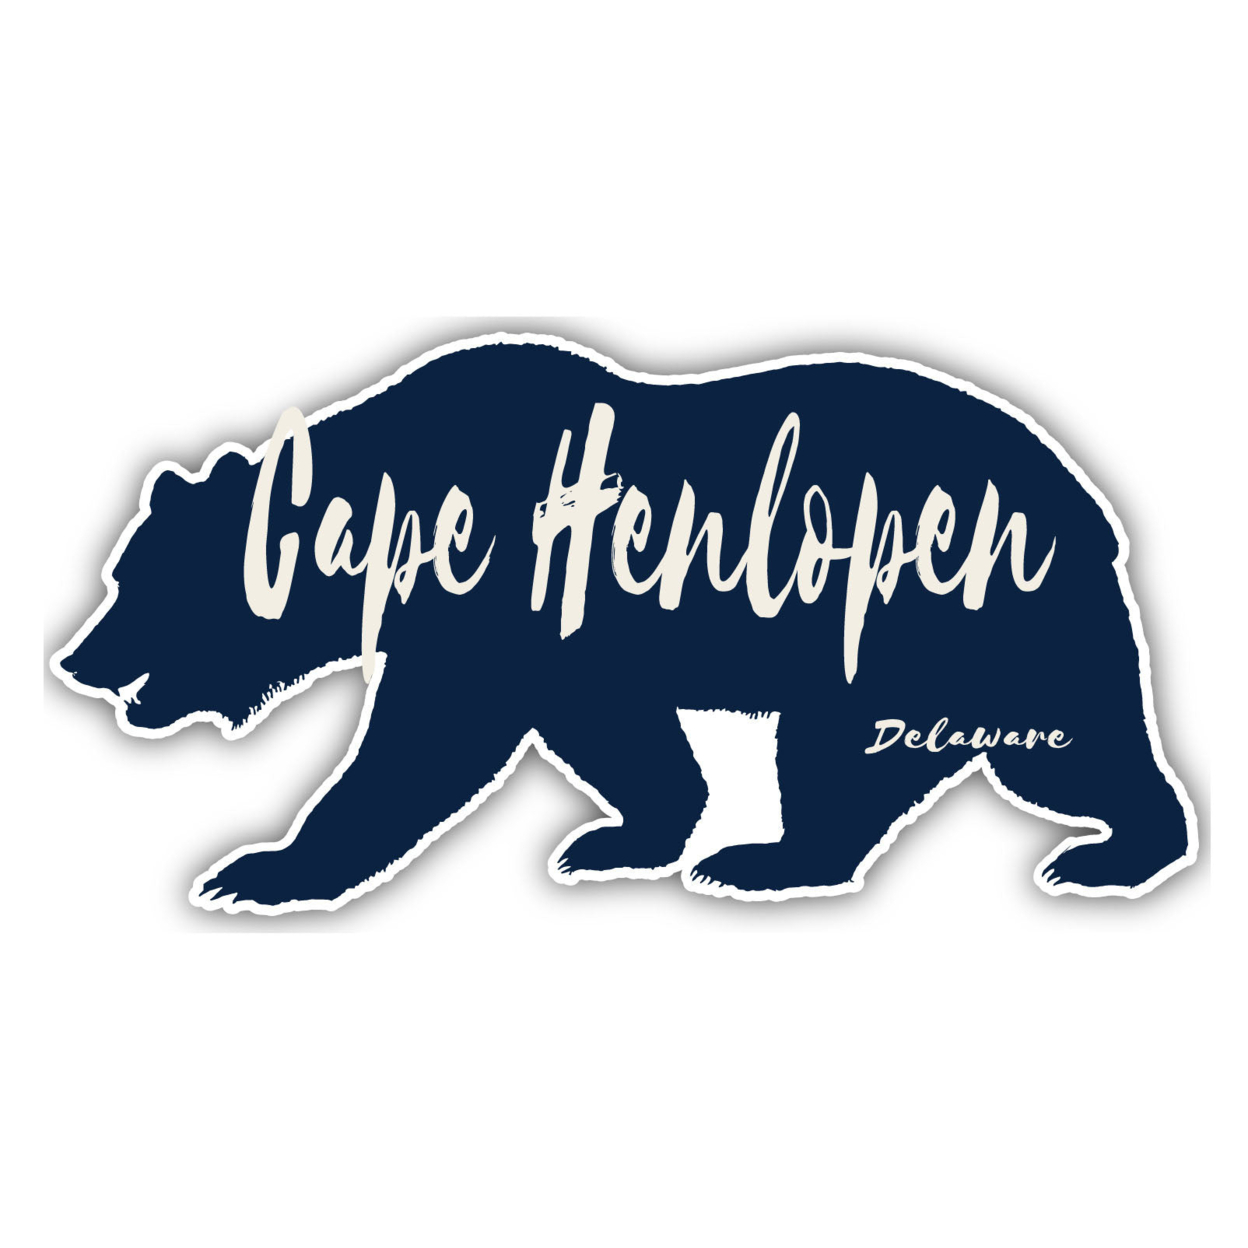 Cape Henlopen Delaware Souvenir Decorative Stickers (Choose Theme And Size) - Single Unit, 2-Inch, Bear